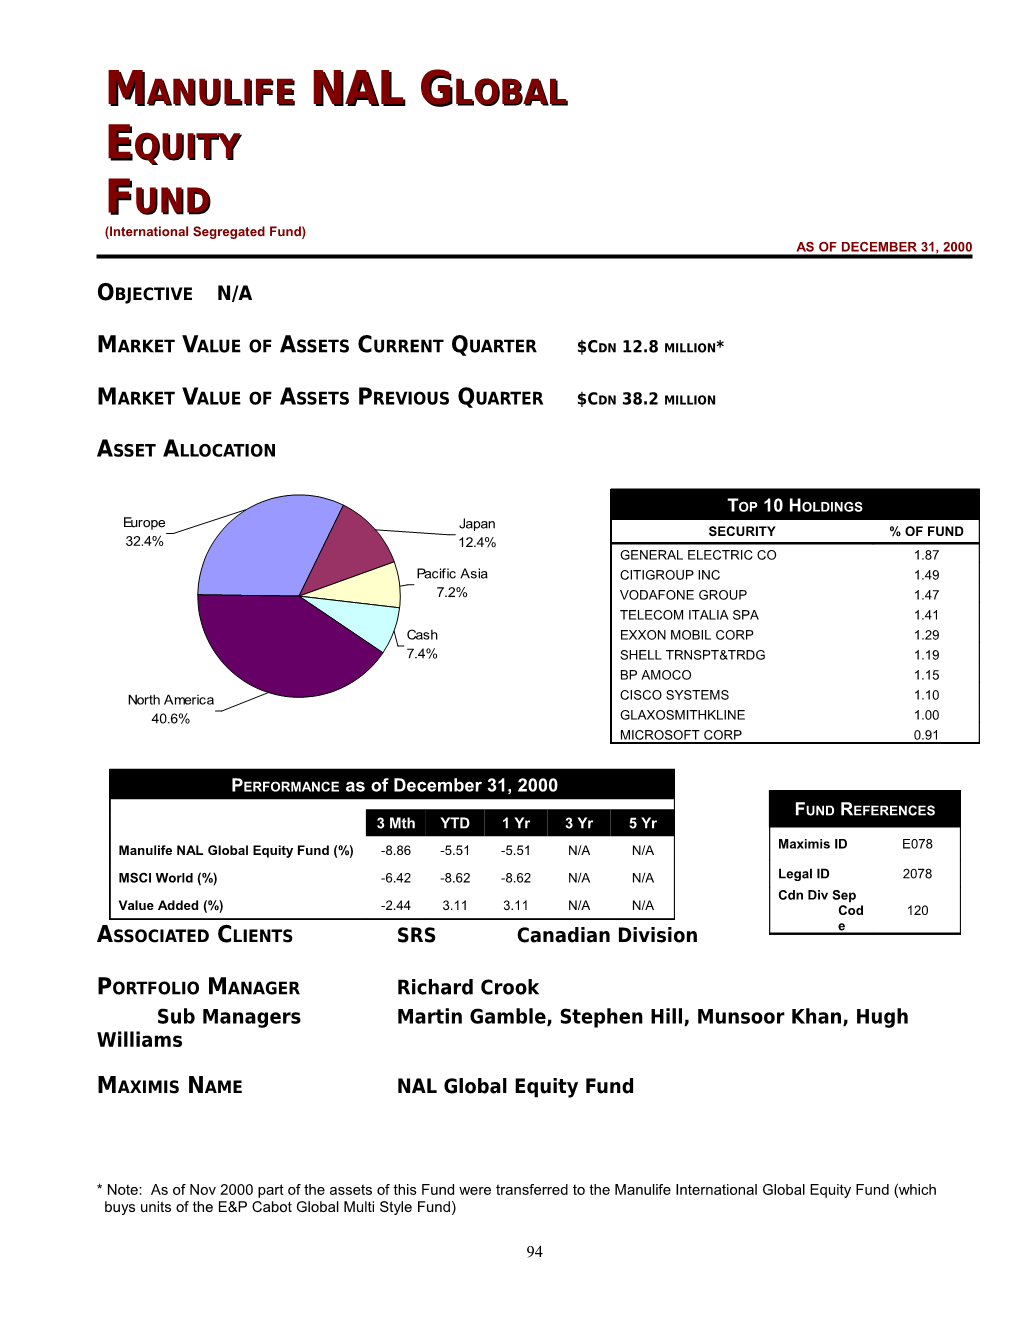 Market Value of Assets Current Quarter $Cdn 12.8 Million*